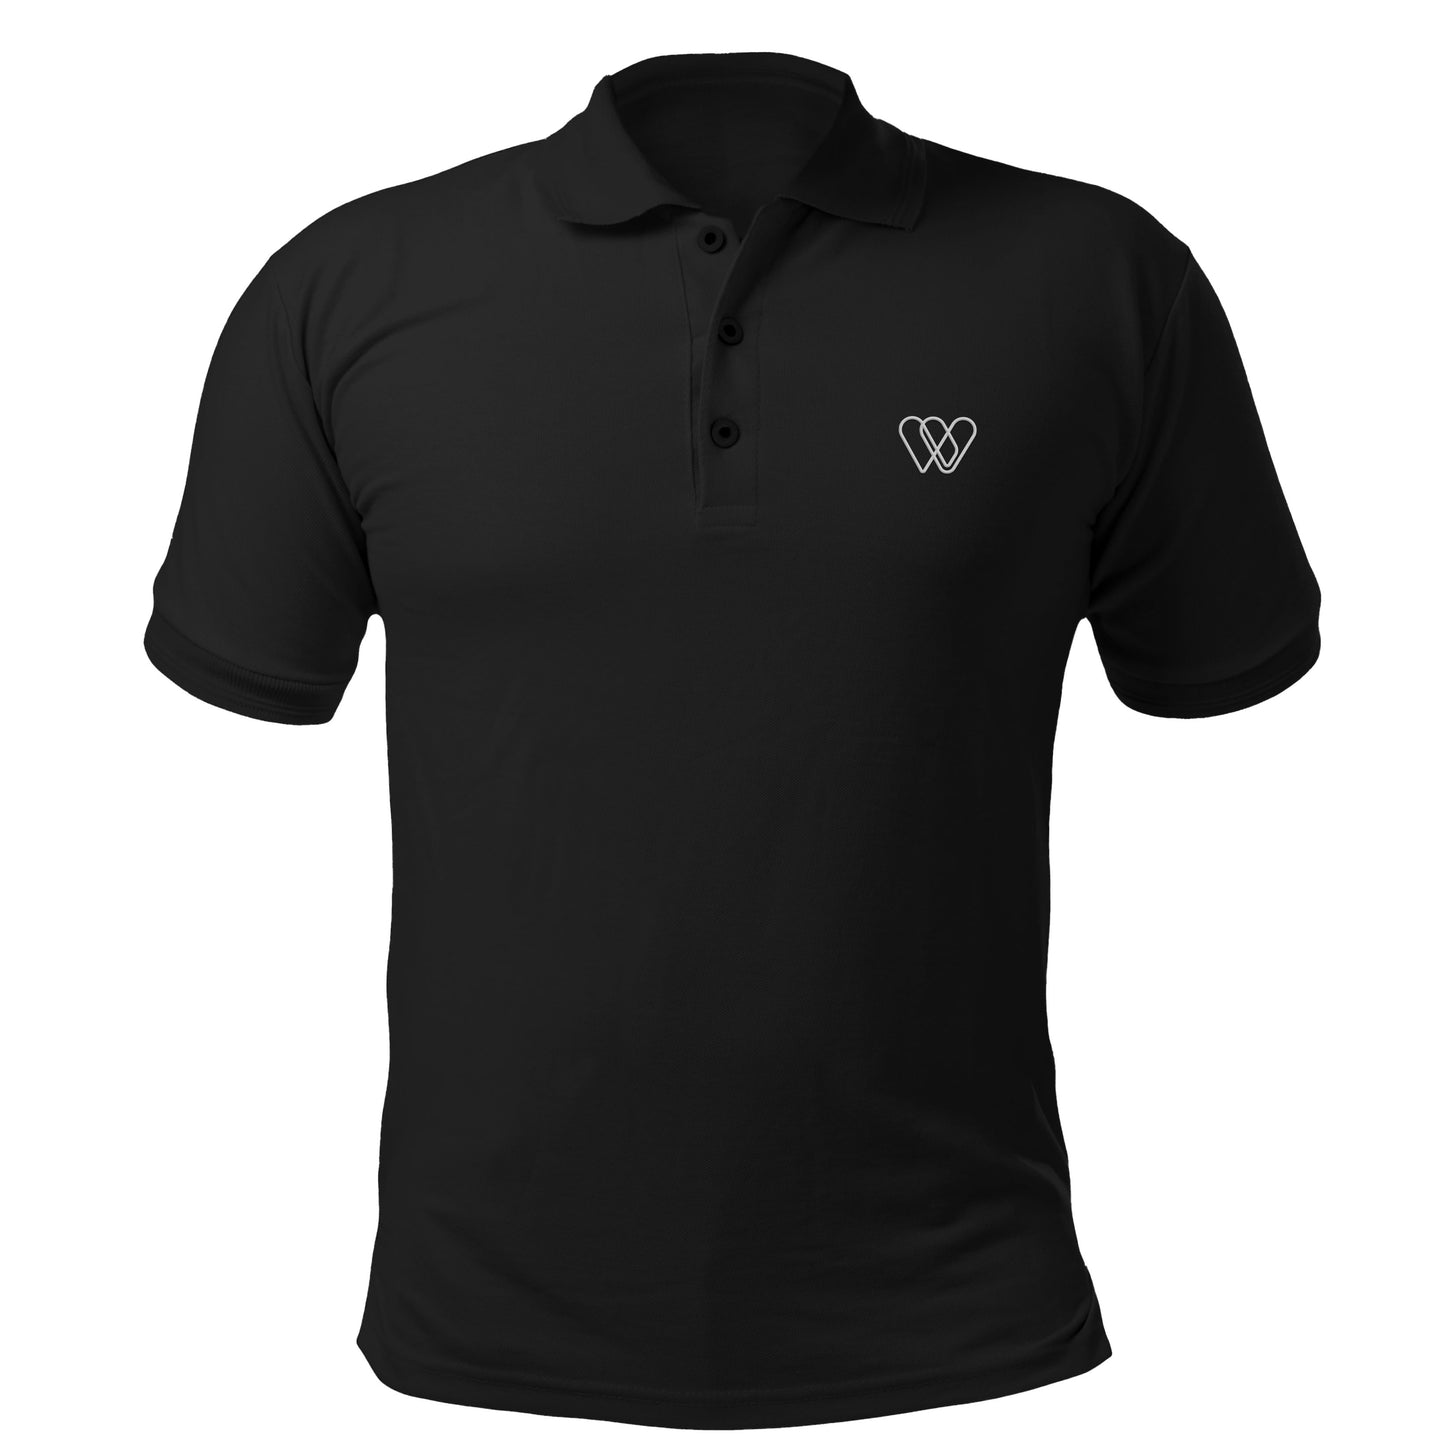 The Wishes Company - Black Polo shirt